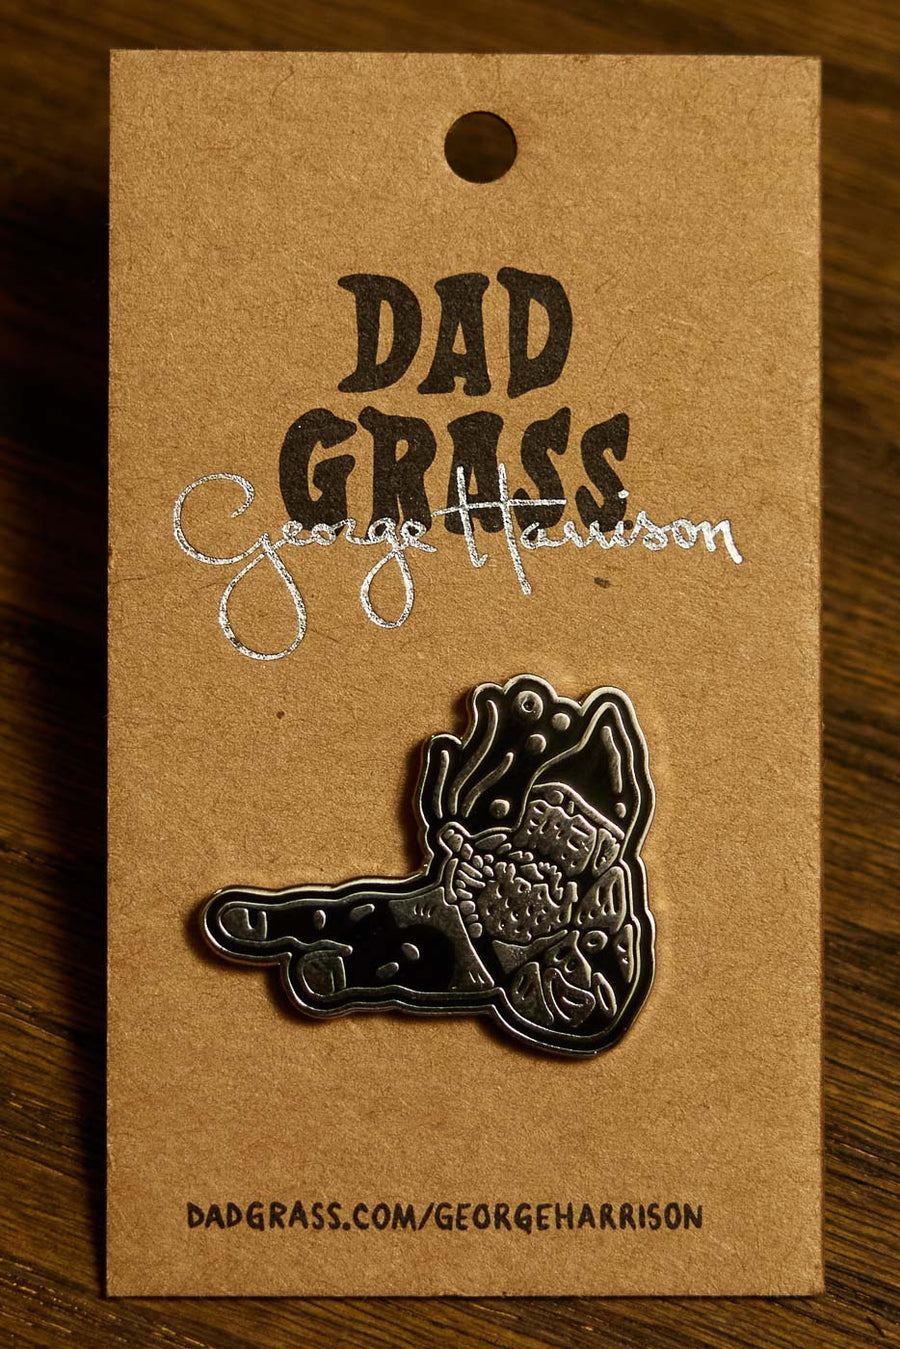 Dad Grass x George Harrison Gnome Pin